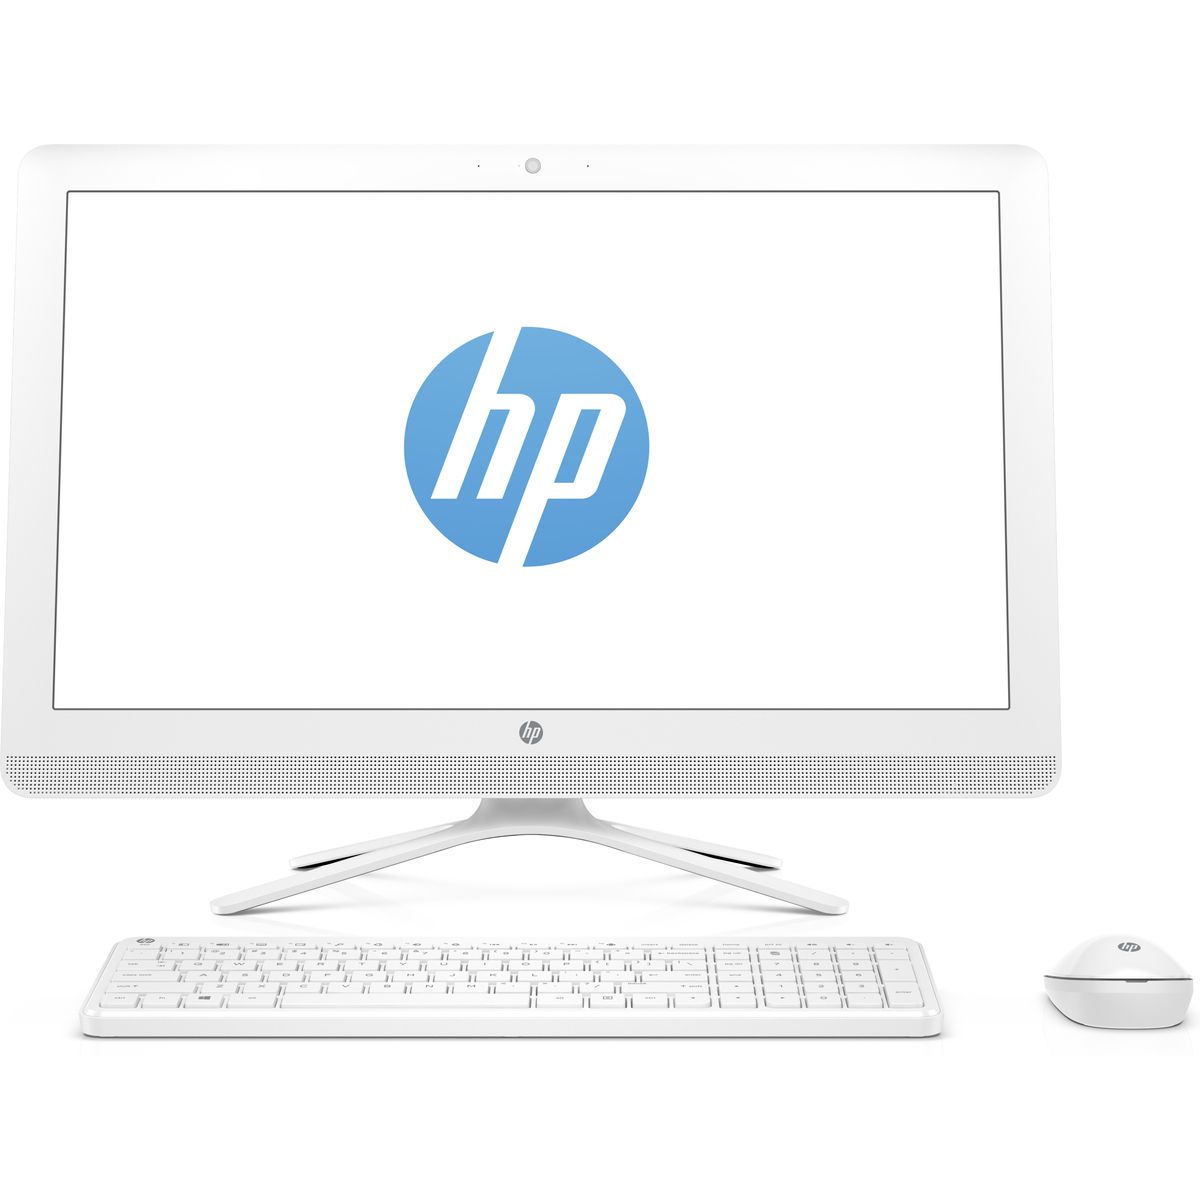 HP Ordinateur de bureau HP All-in-One 24-g005nf - Blanc pas cher 